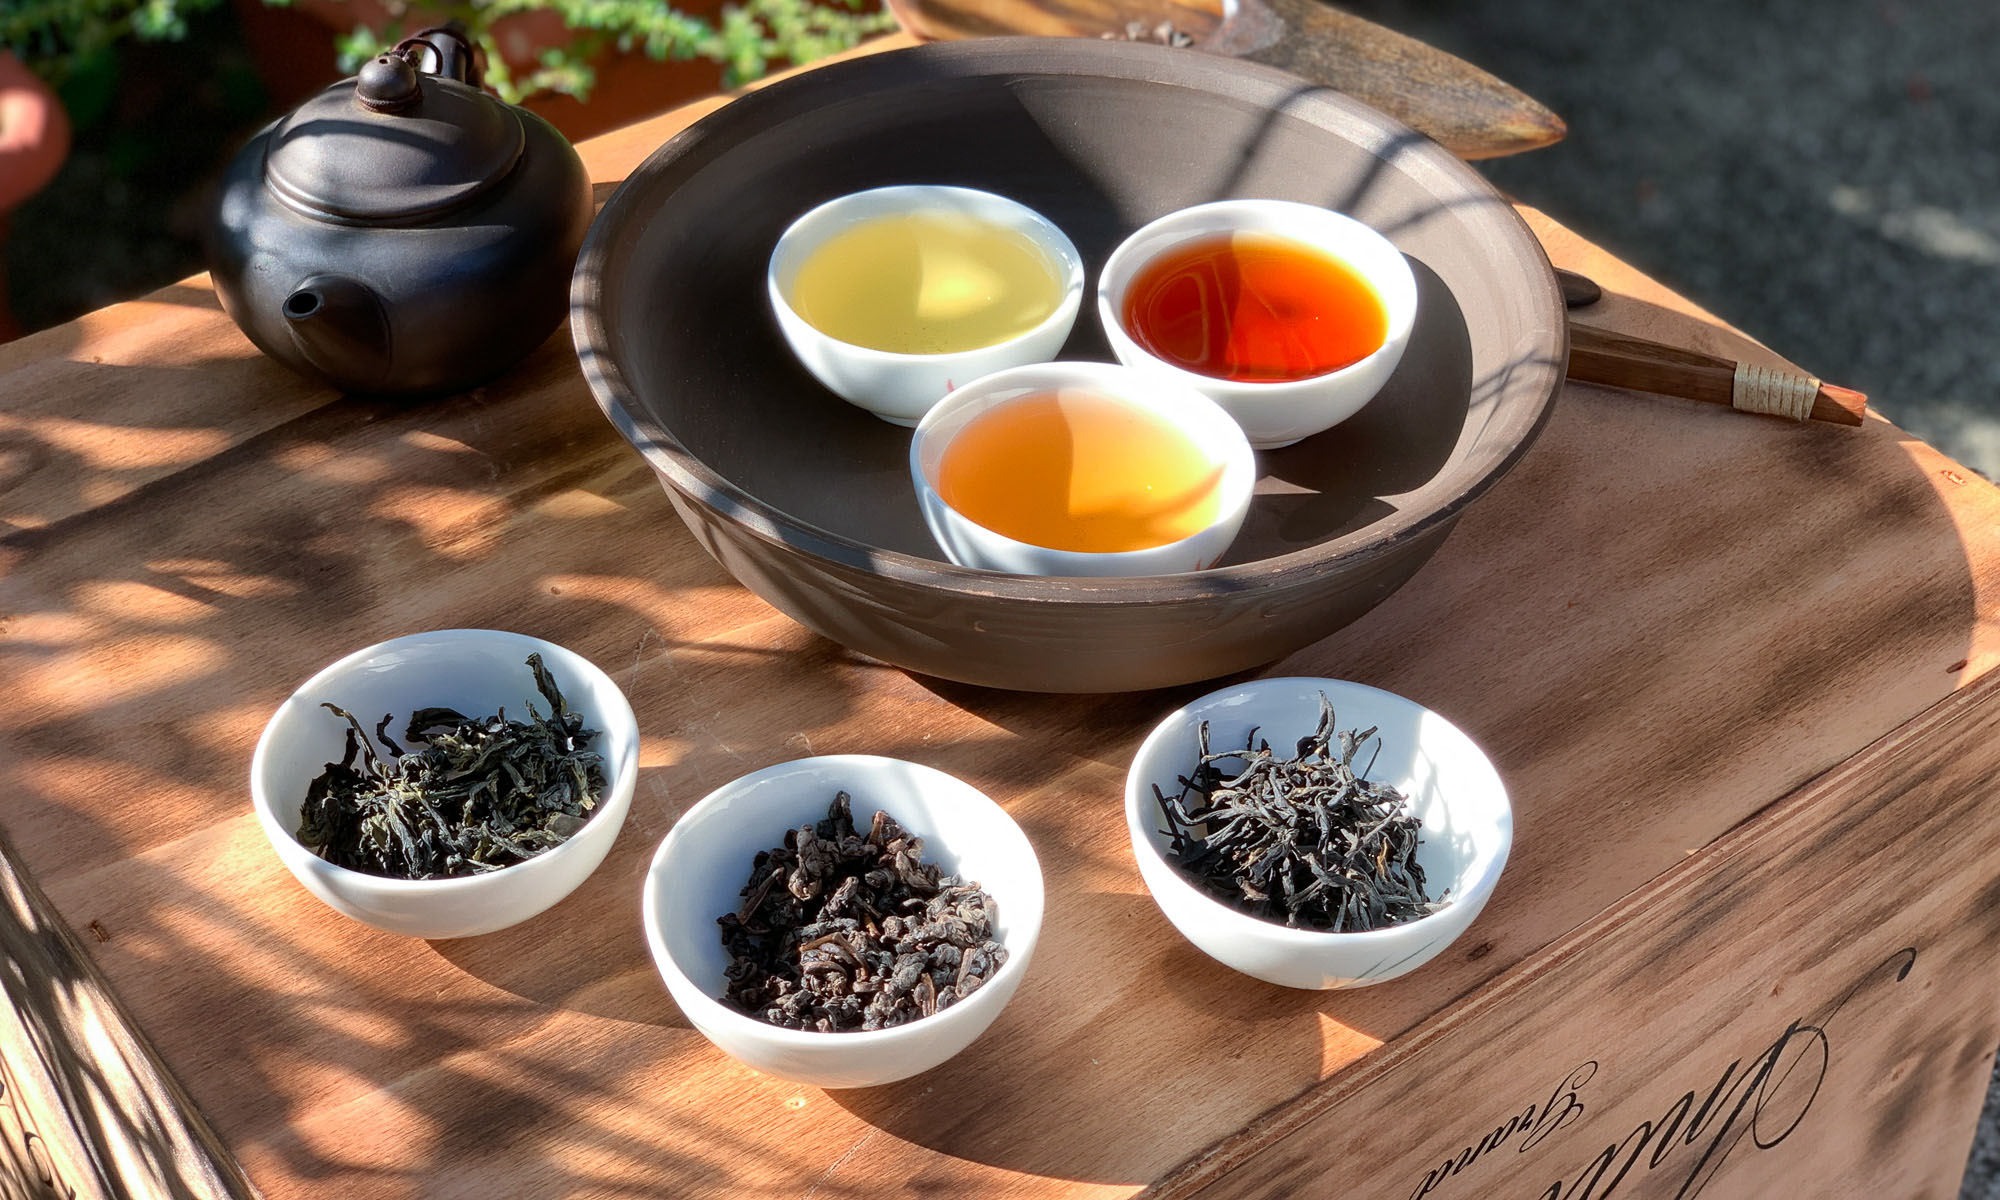 A Tea tasting spread at Six Seasons Teahouse in Maokong.